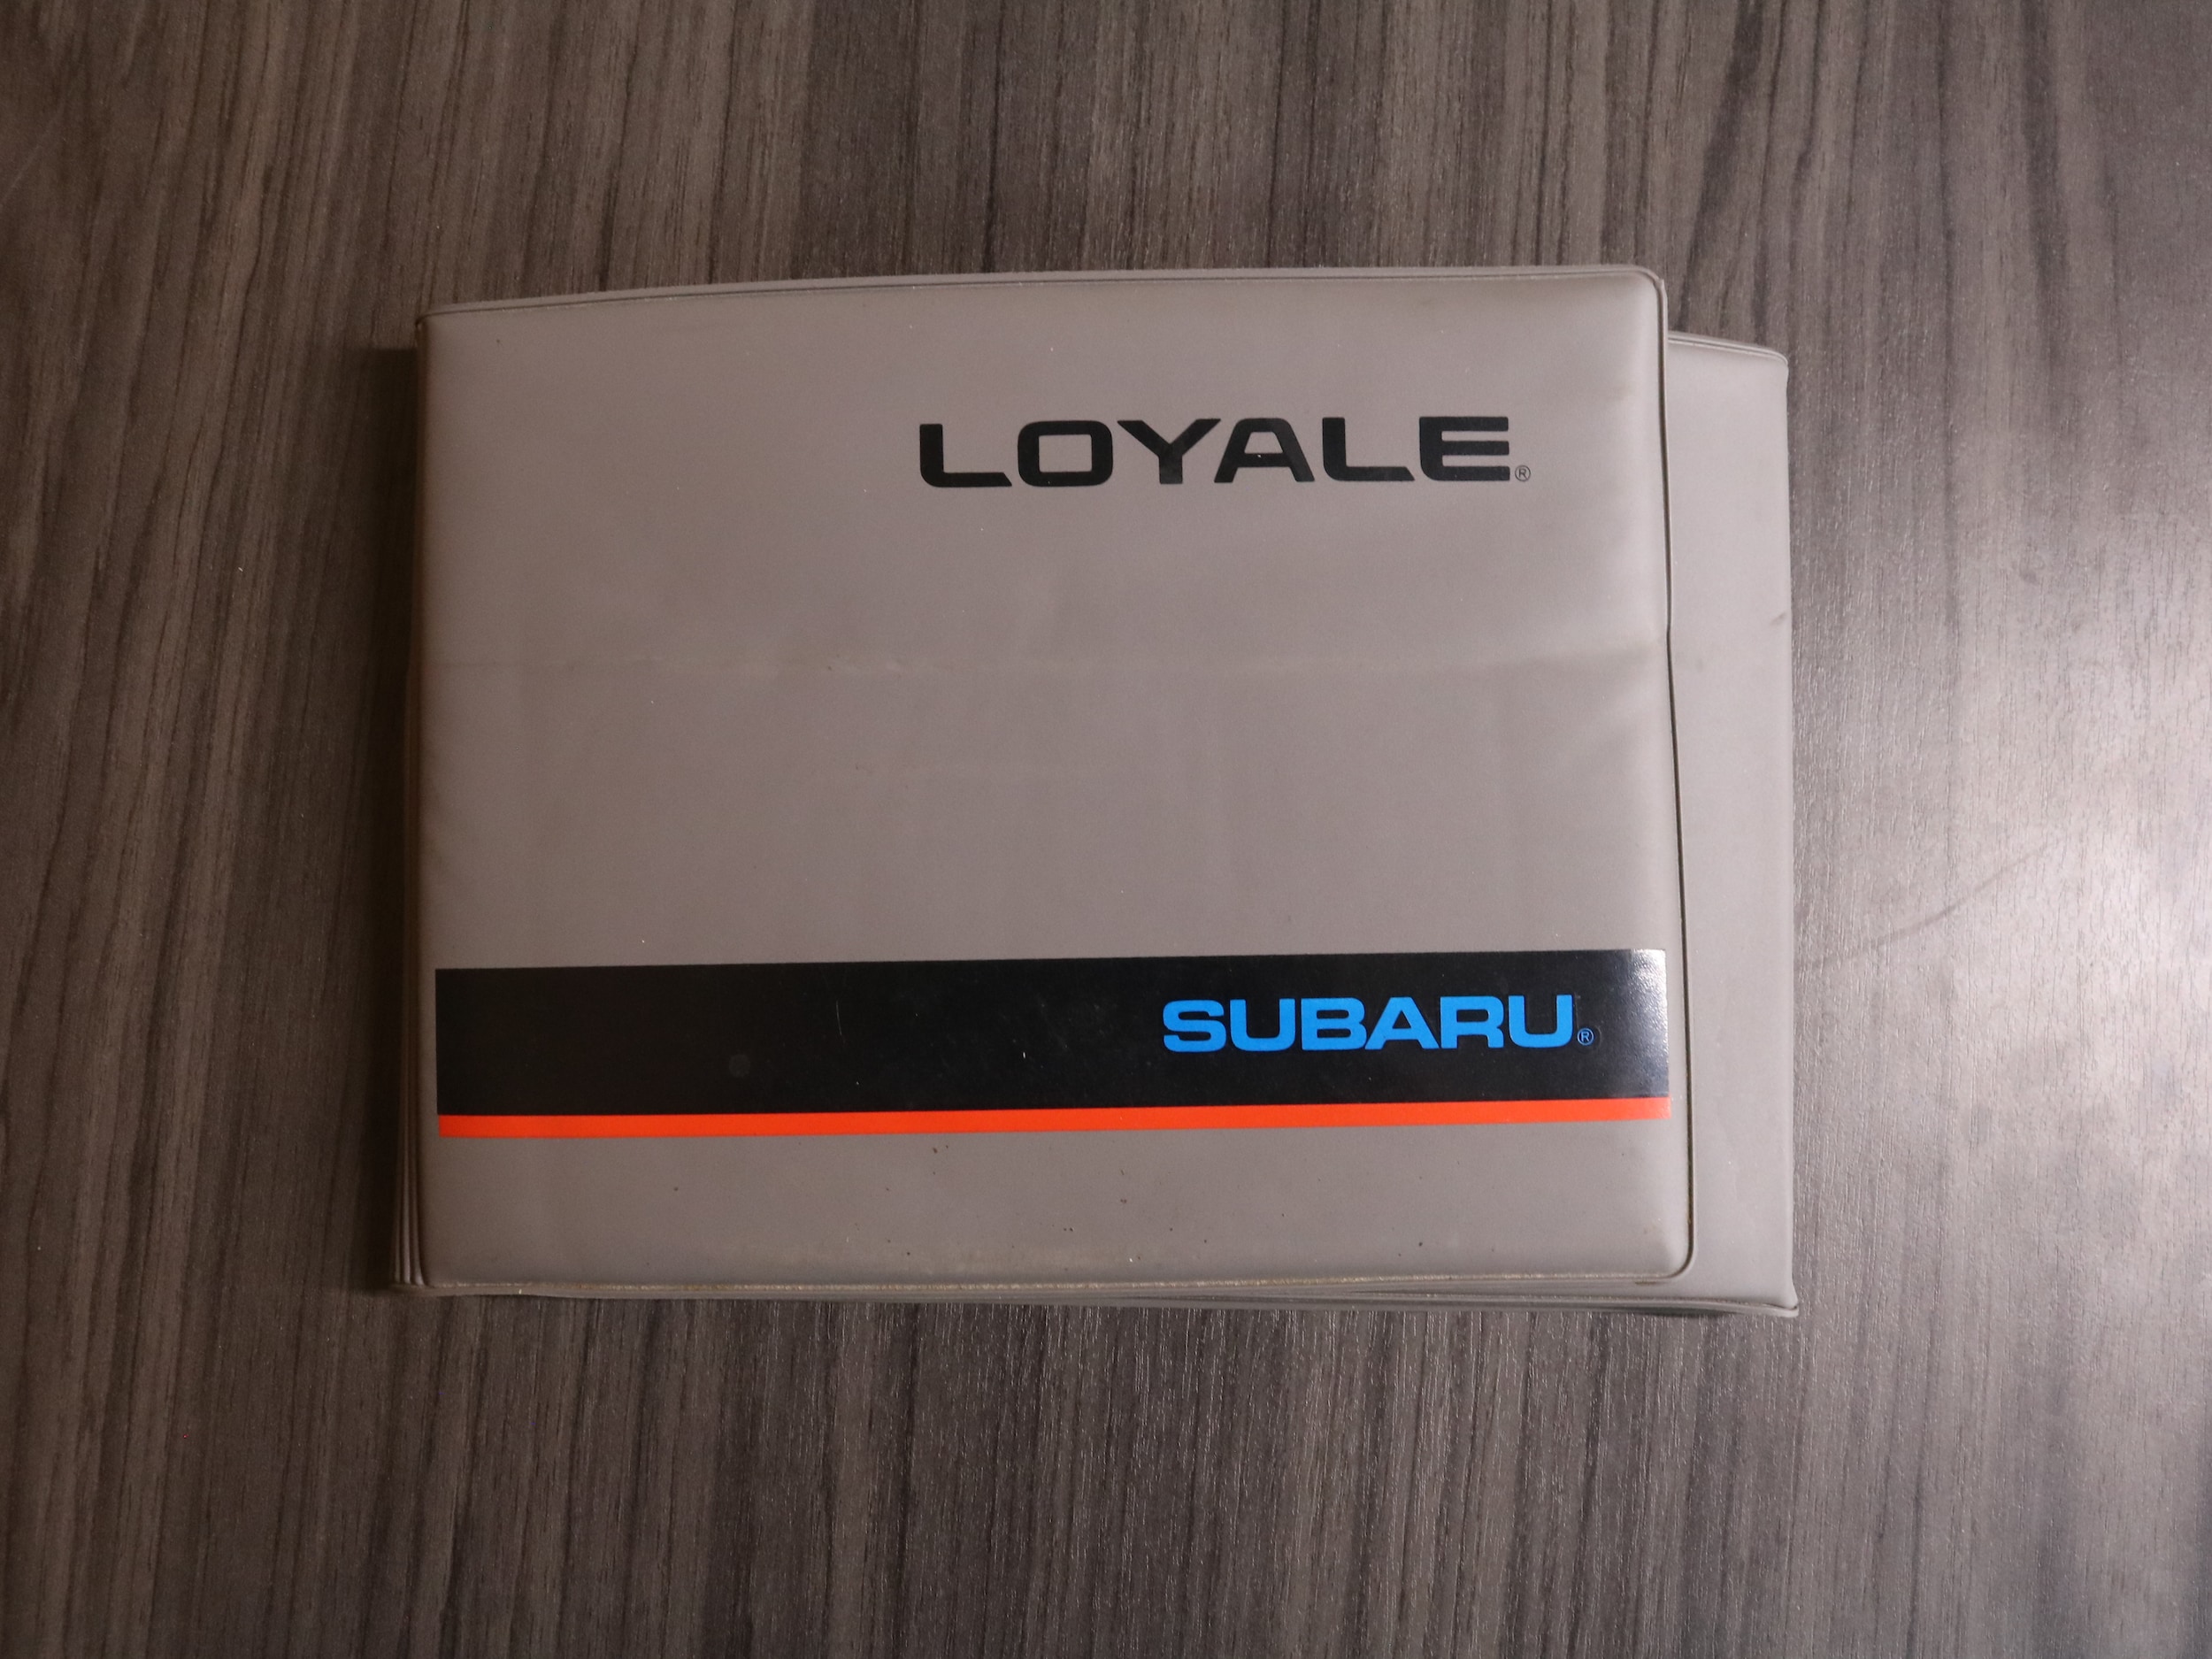 1992 Subaru Loyale 49